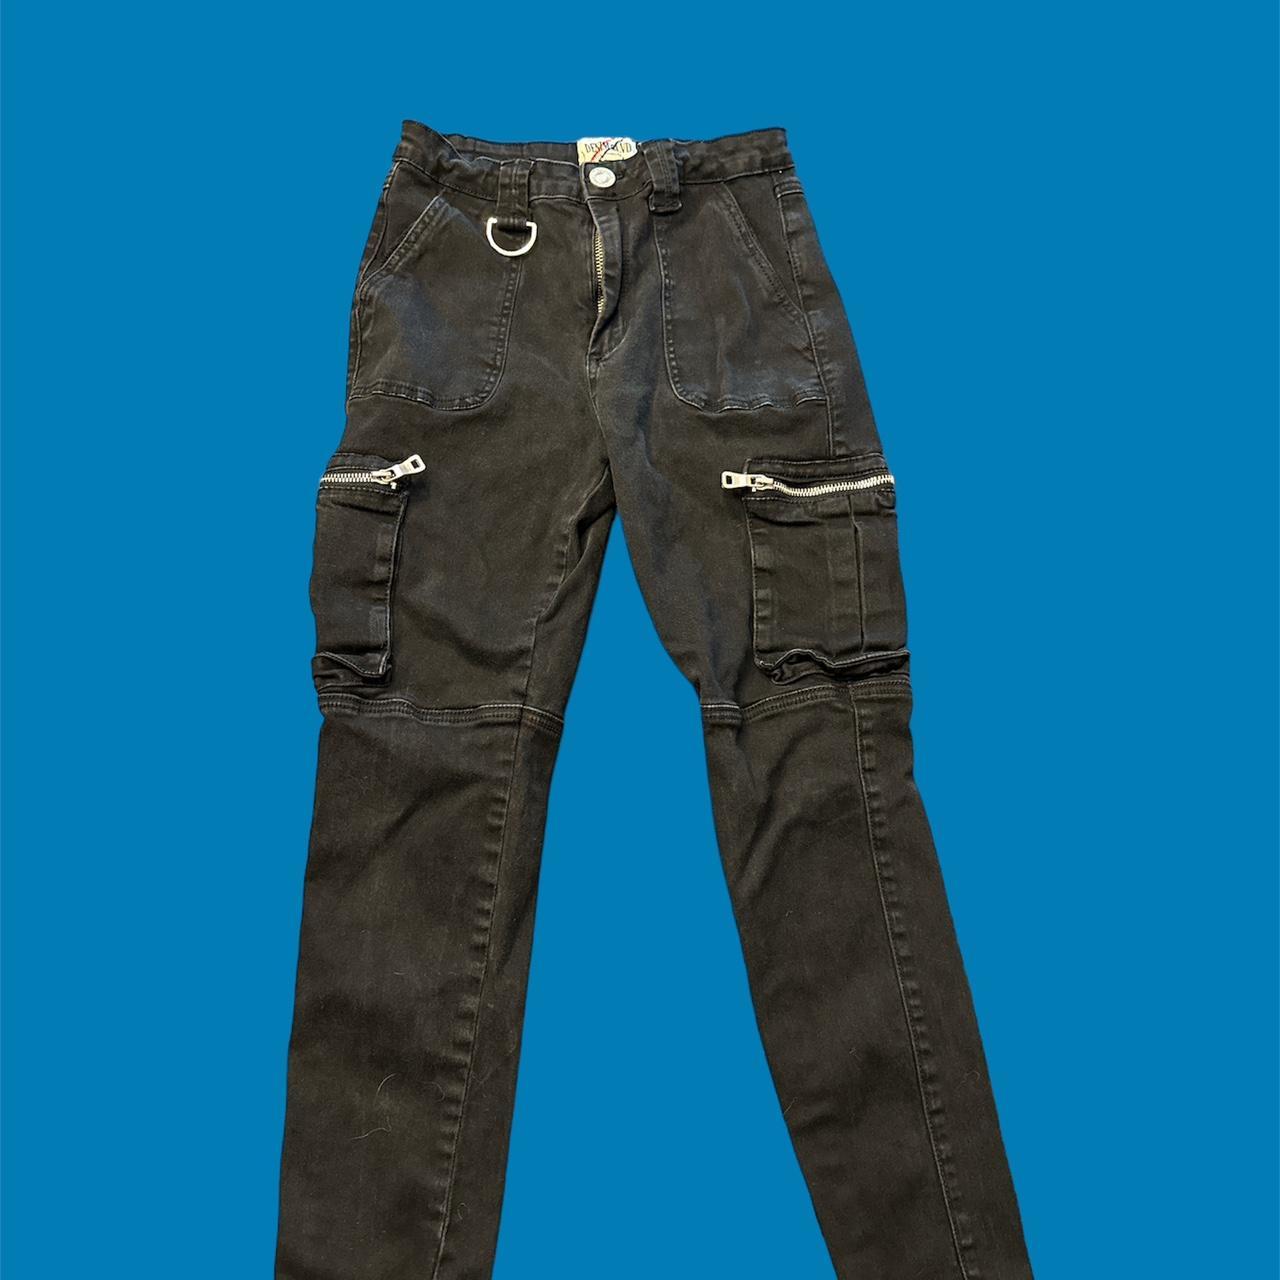 Denim BLVD Los Angeles, Juniors, Size 1, Blue Jeans w Side Stripes,  Distressed | eBay